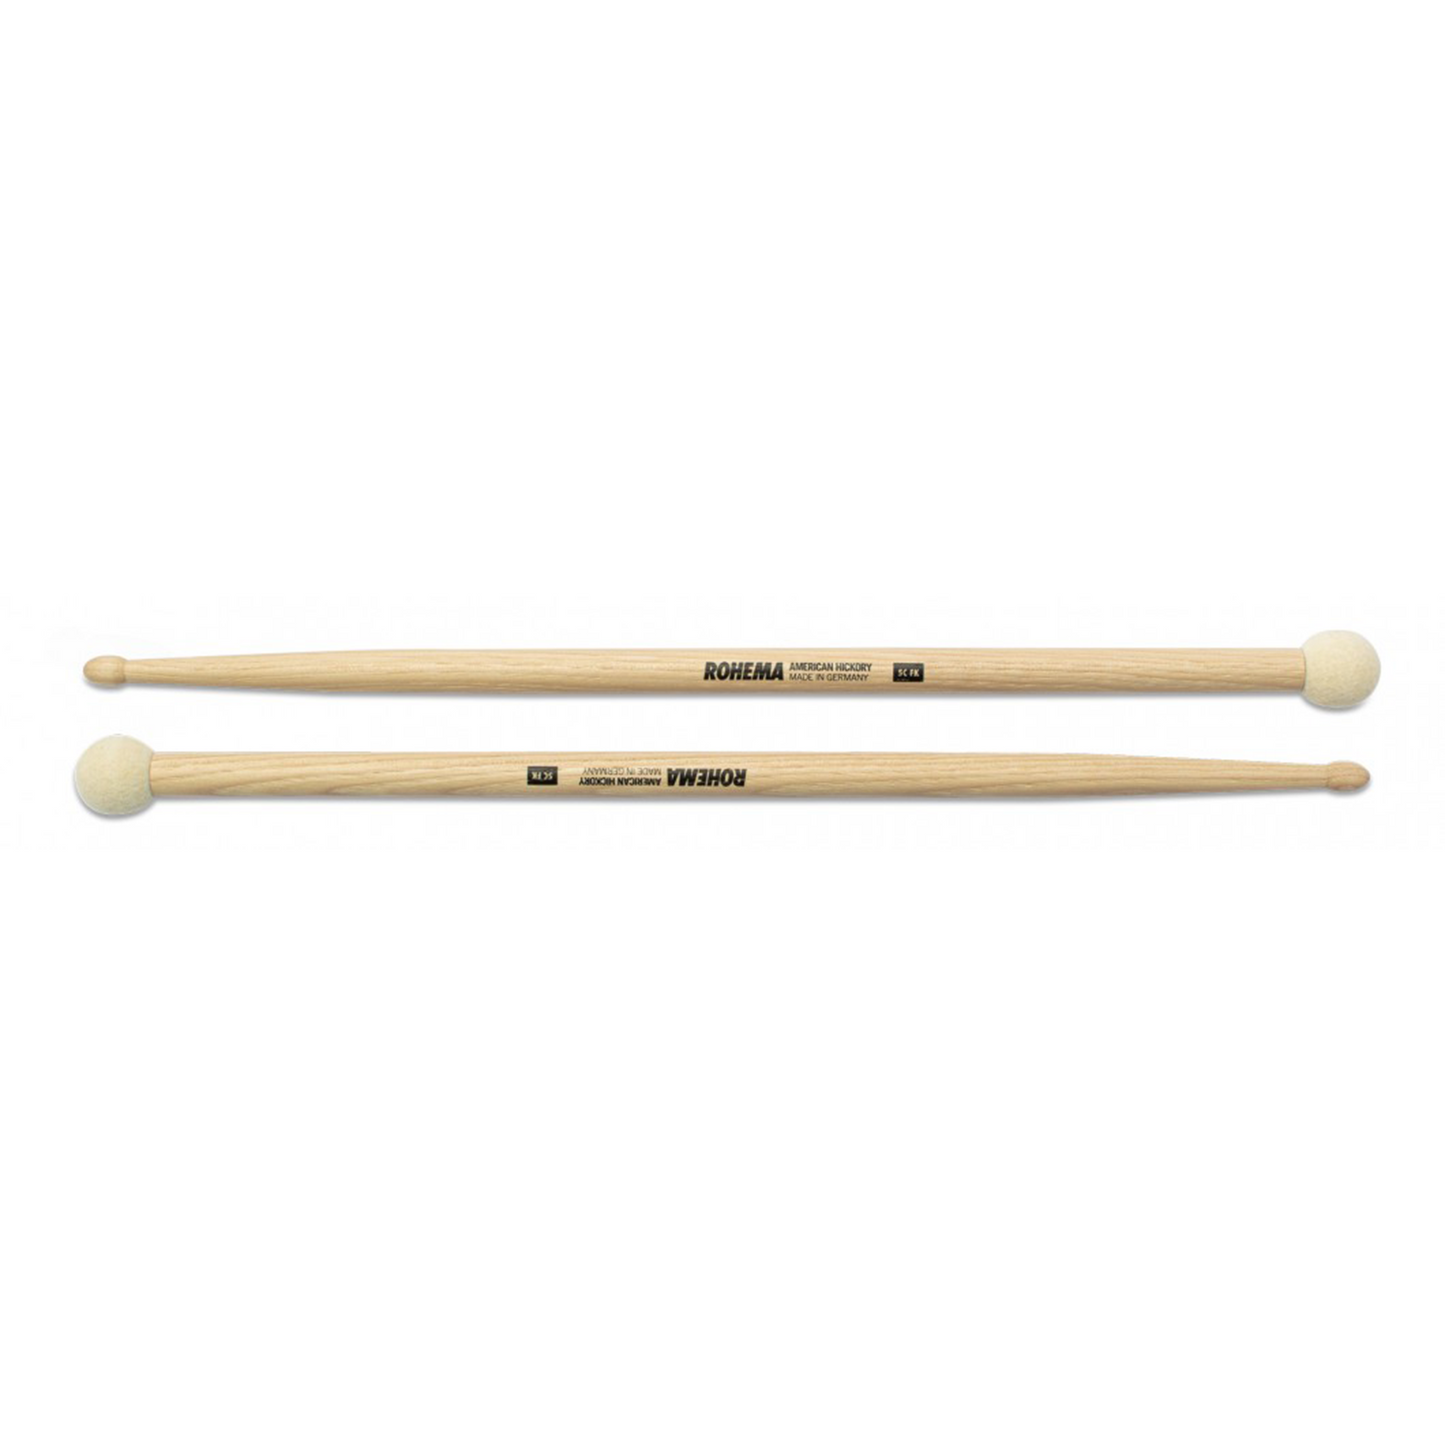 Rohema Kombi Sticks 5C FK Felt Mallet / Hickory Drum Sticks - 613321